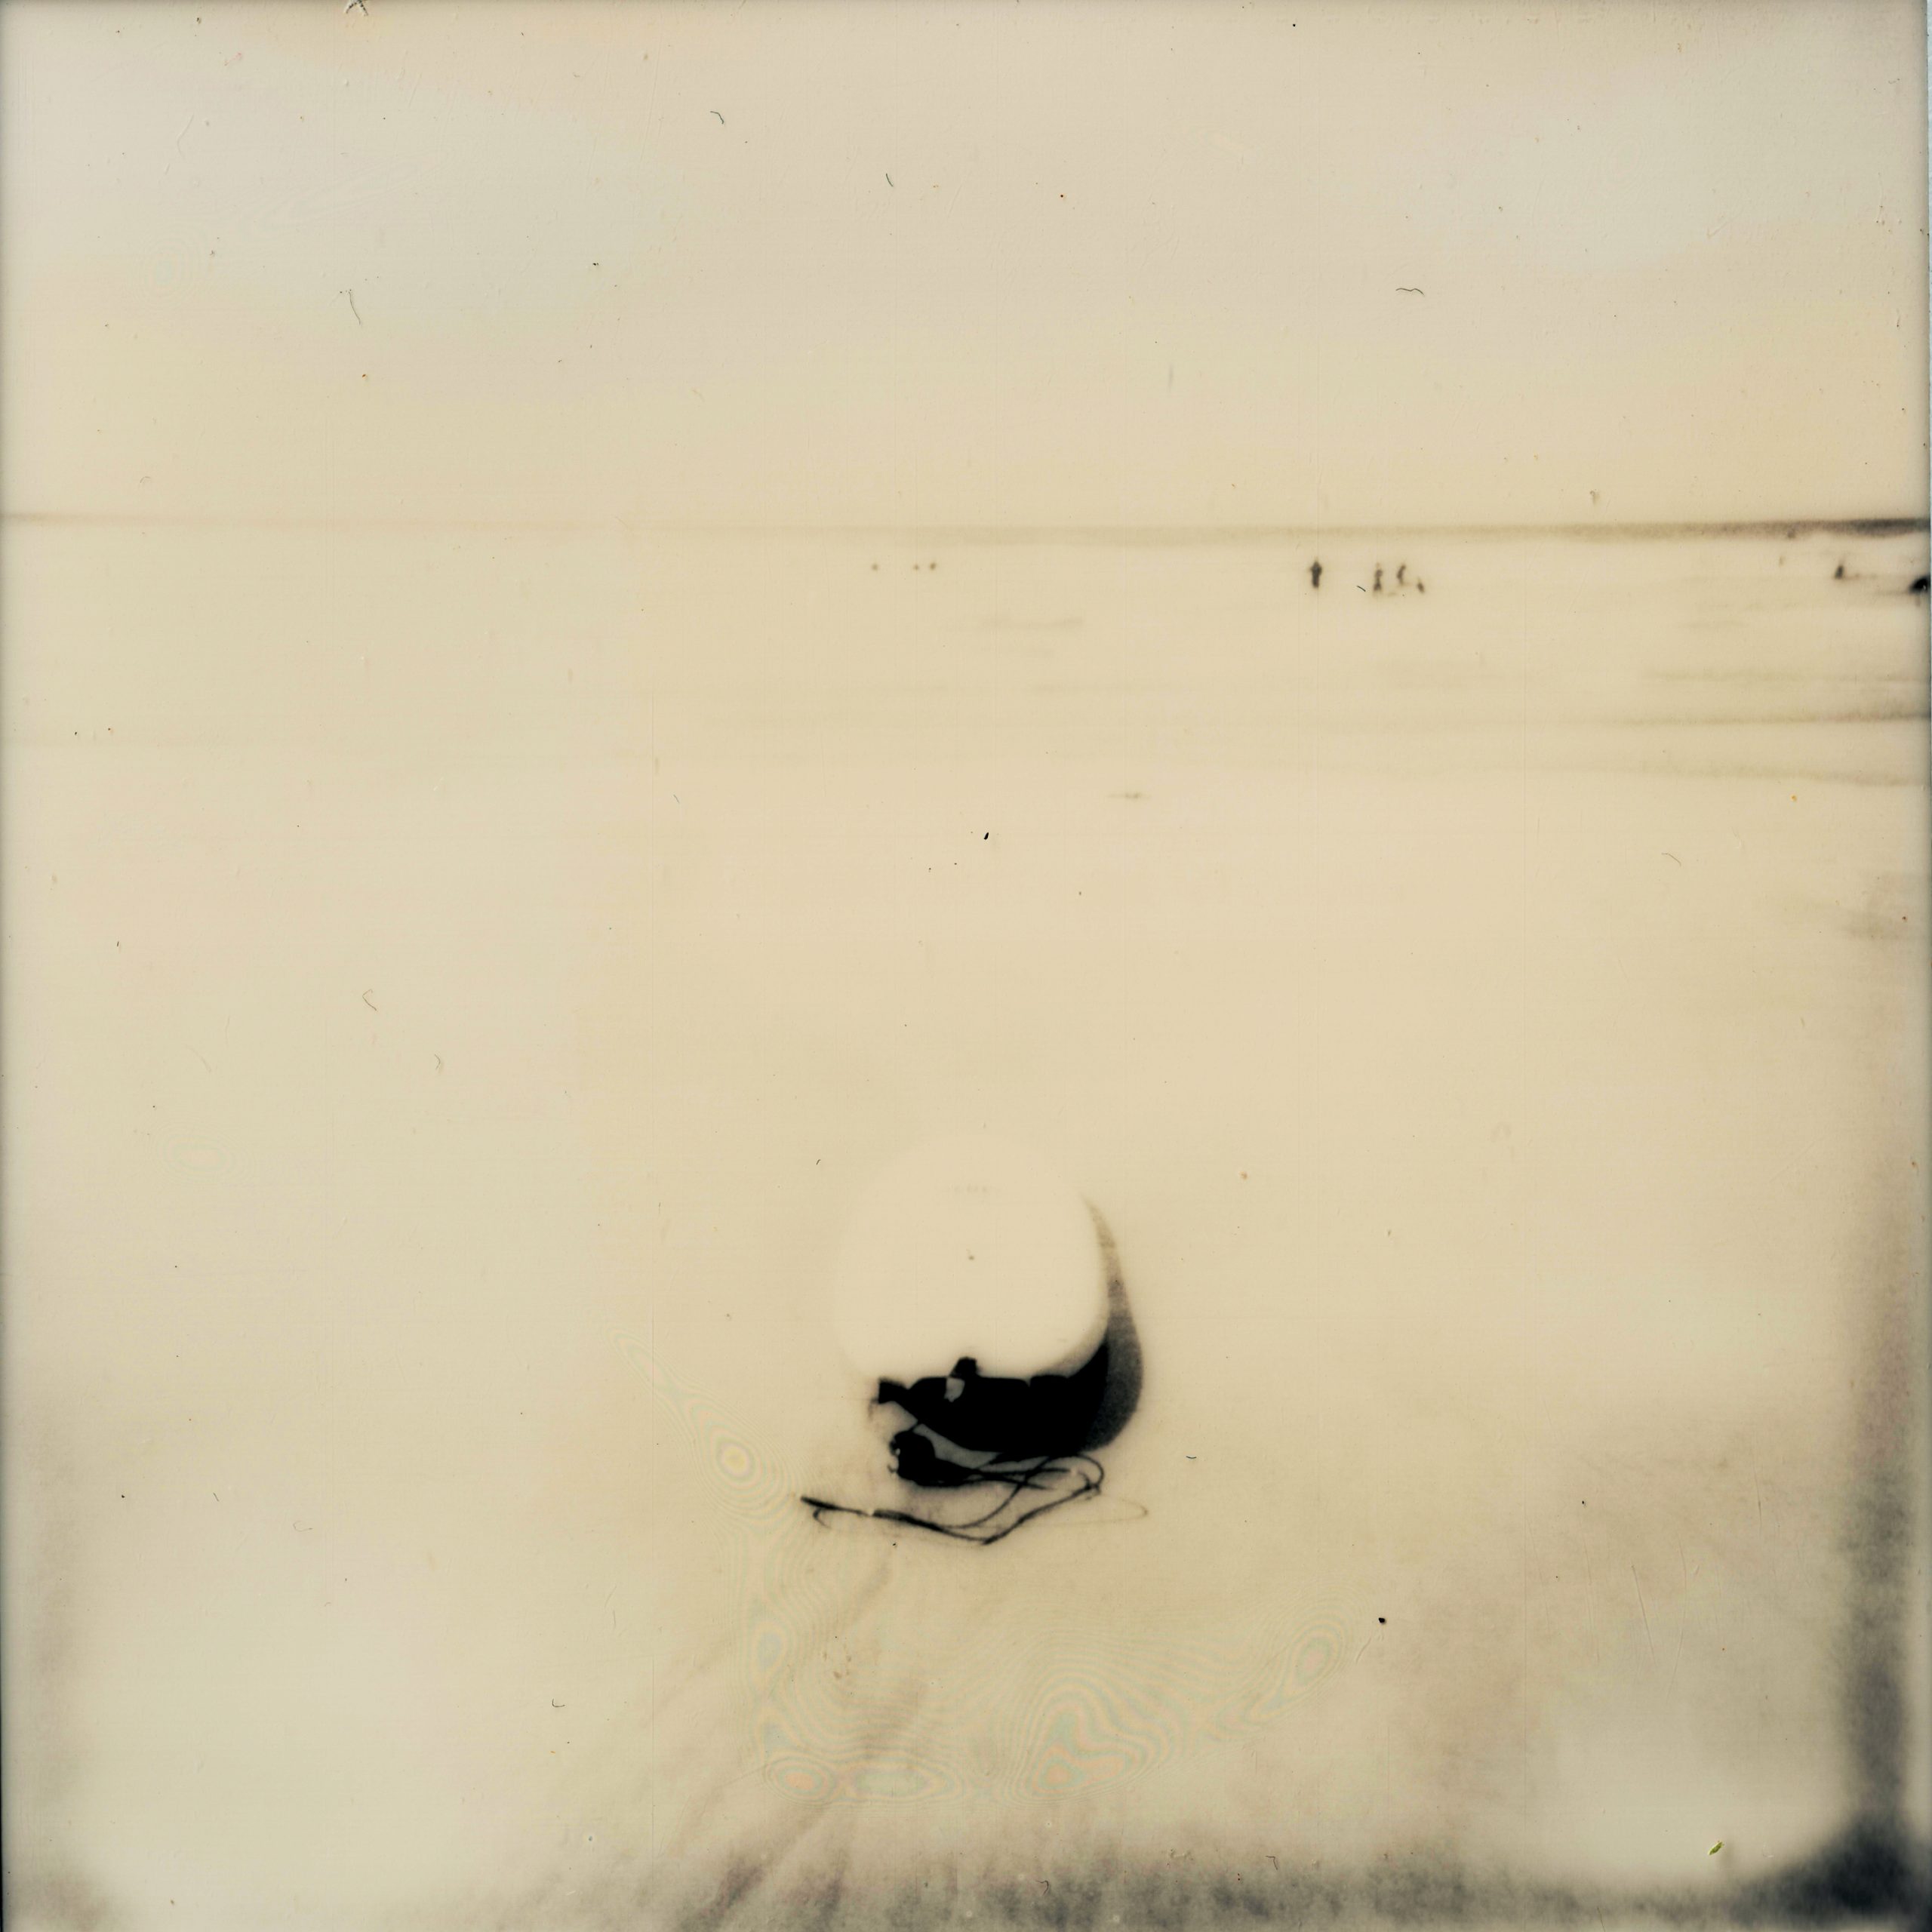 Fistral beach Polaroid photograph